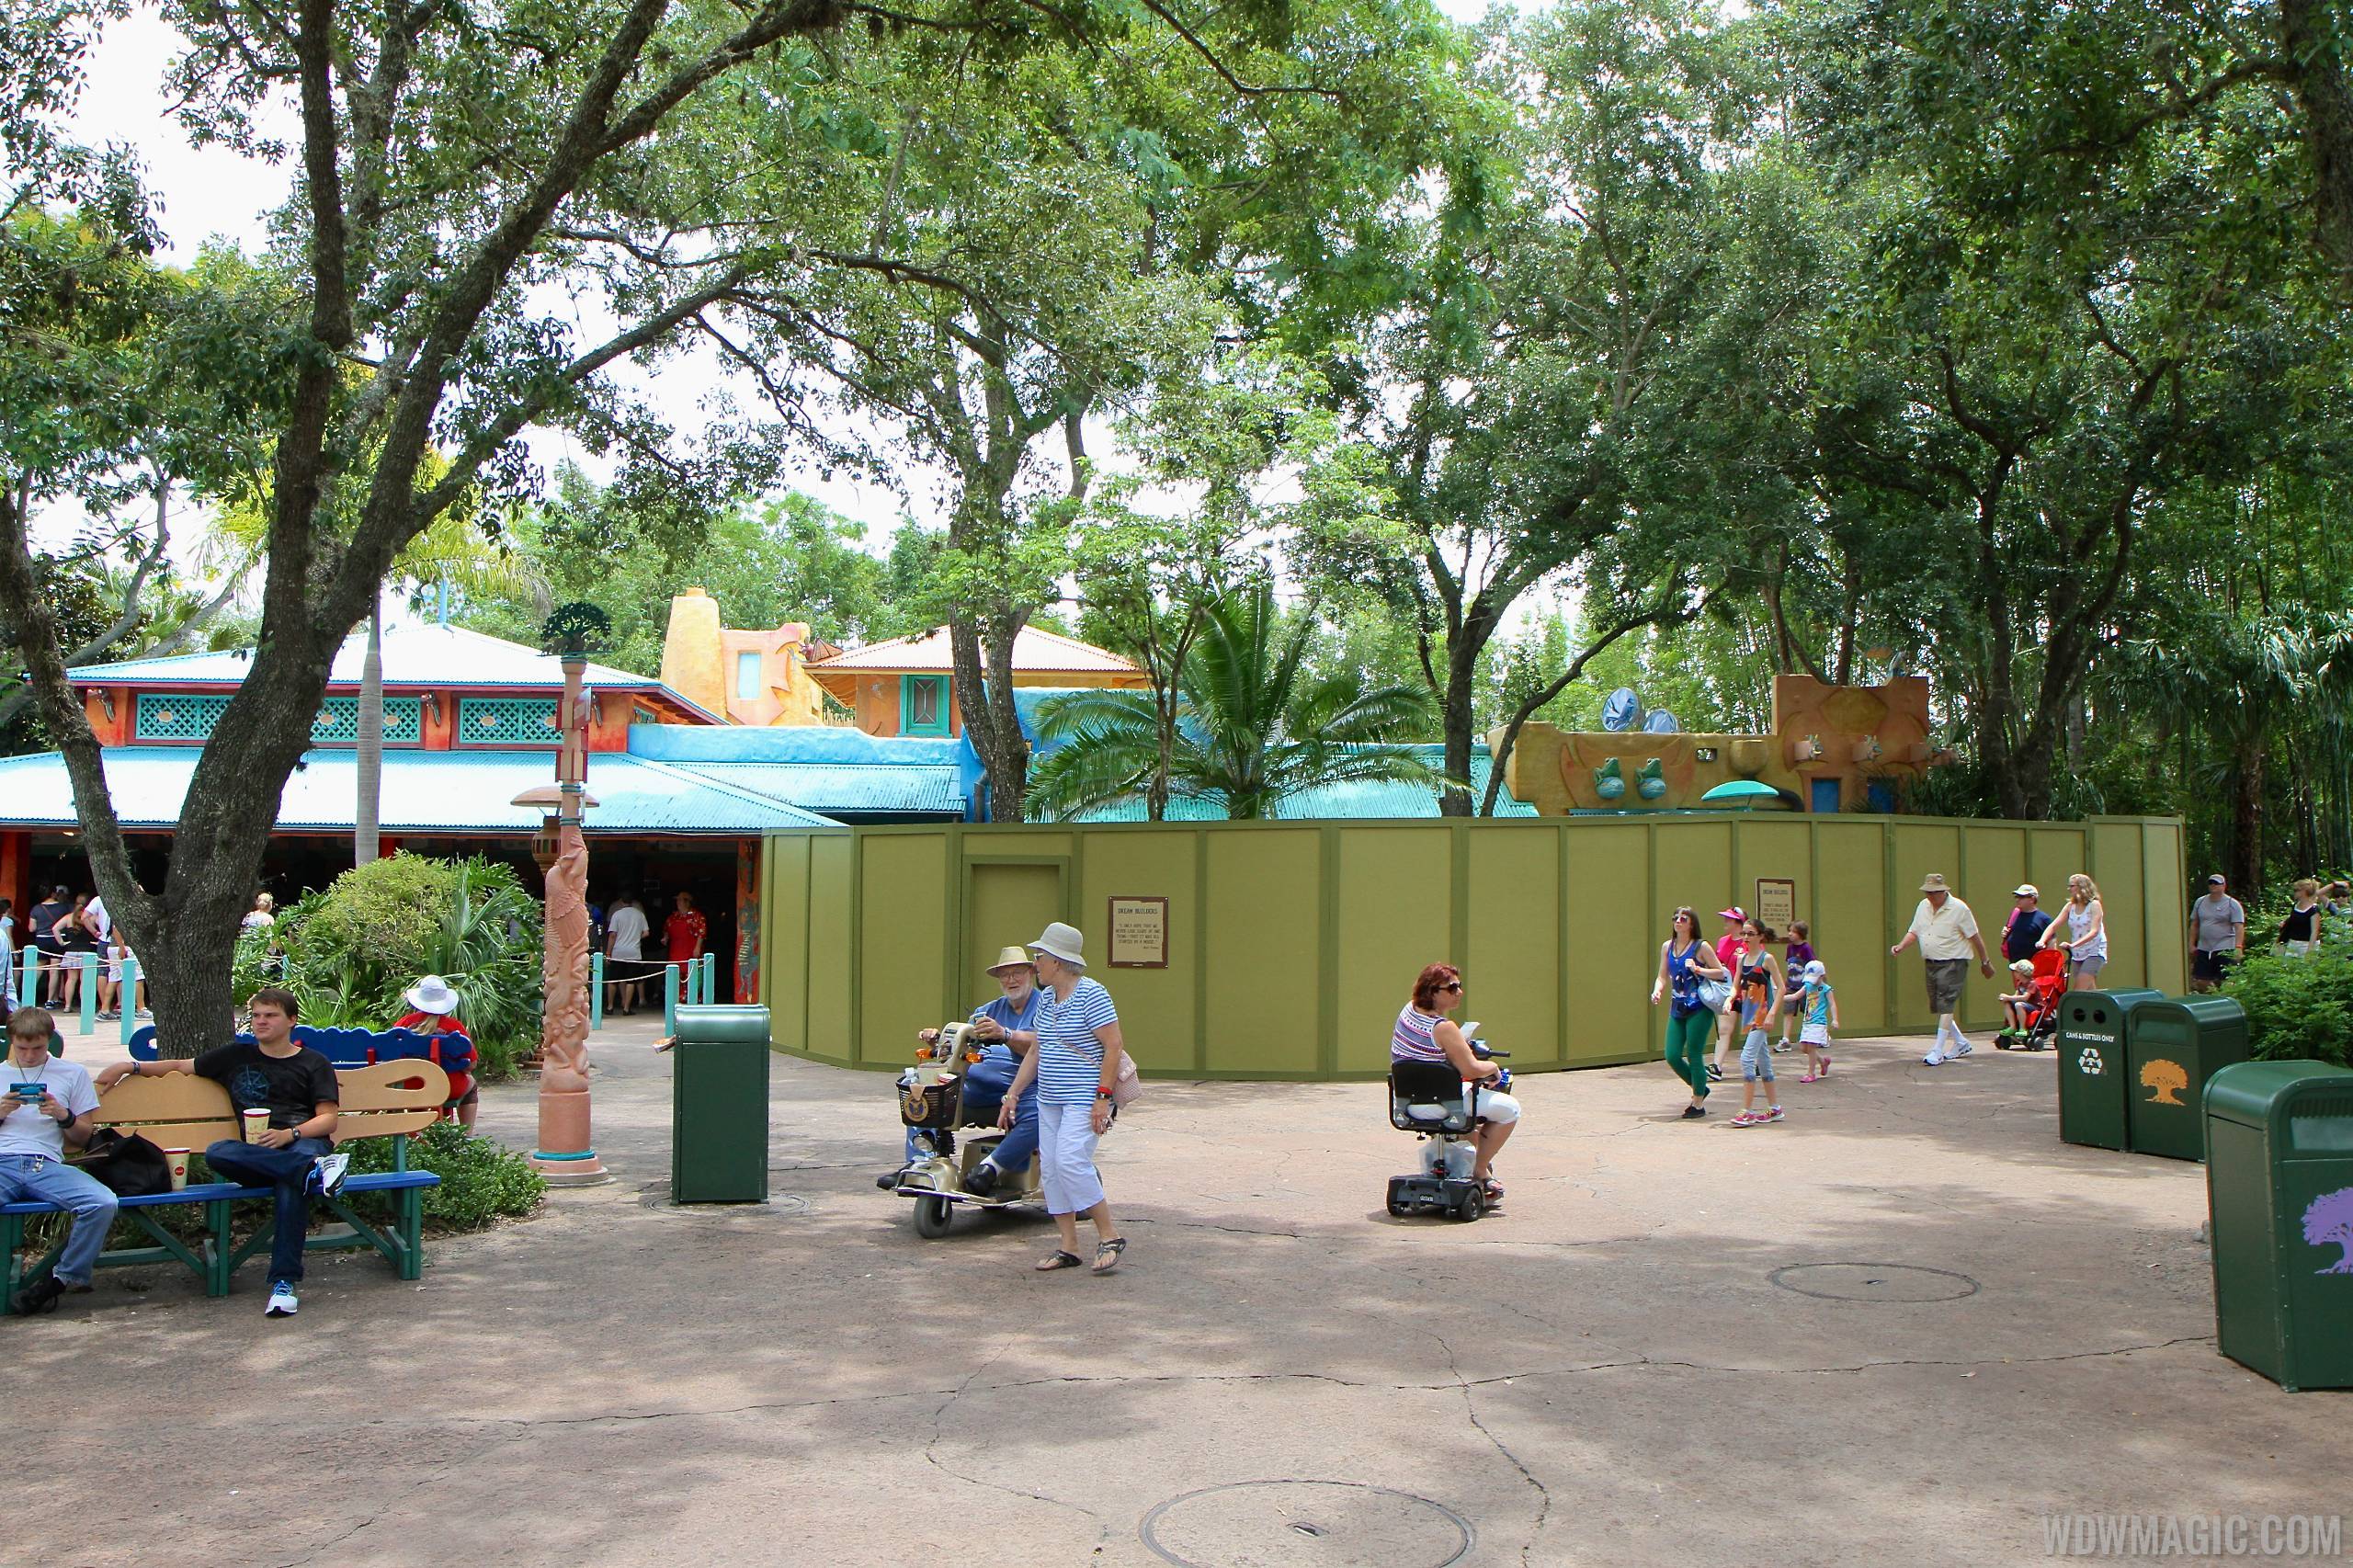 Coffee kiosk construction at Disney's Animal Kingdom